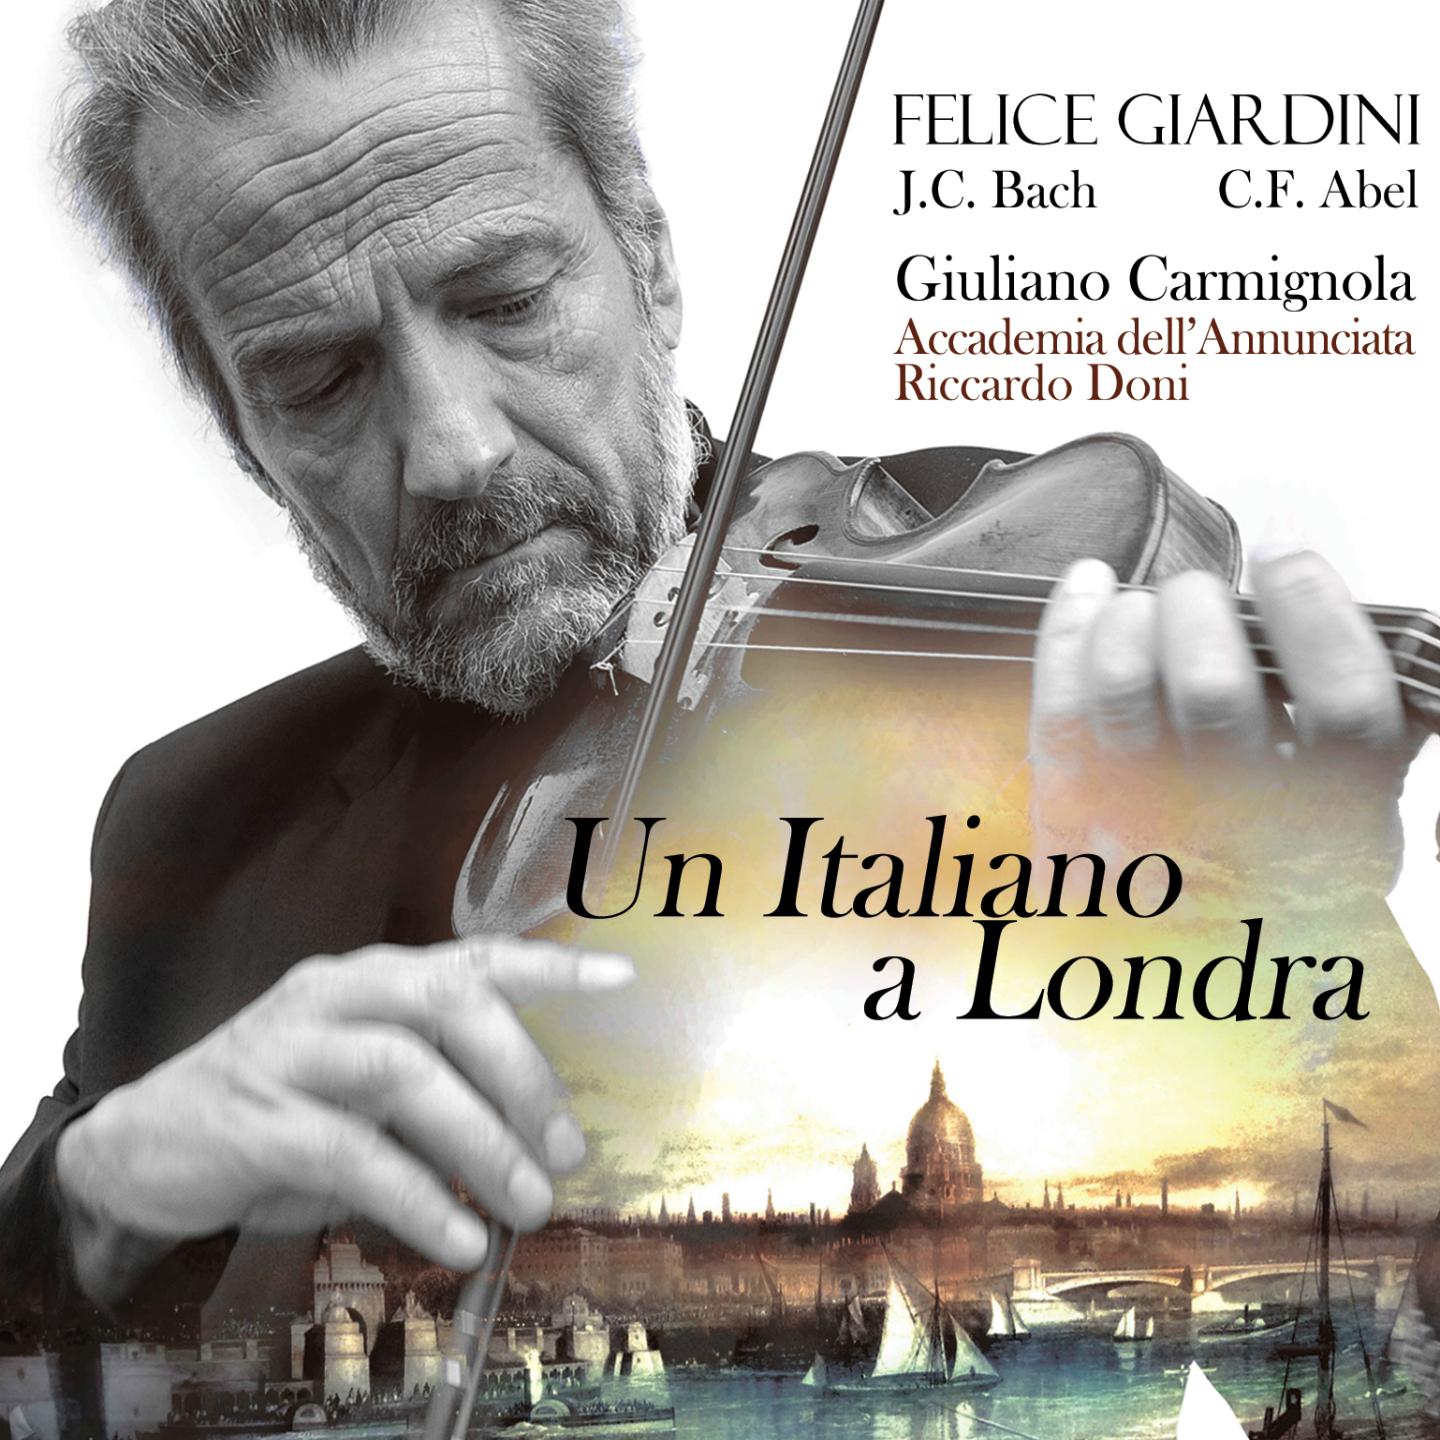 Concerto per violino No. 1, Op. 15: III. Allegro Spiritoso